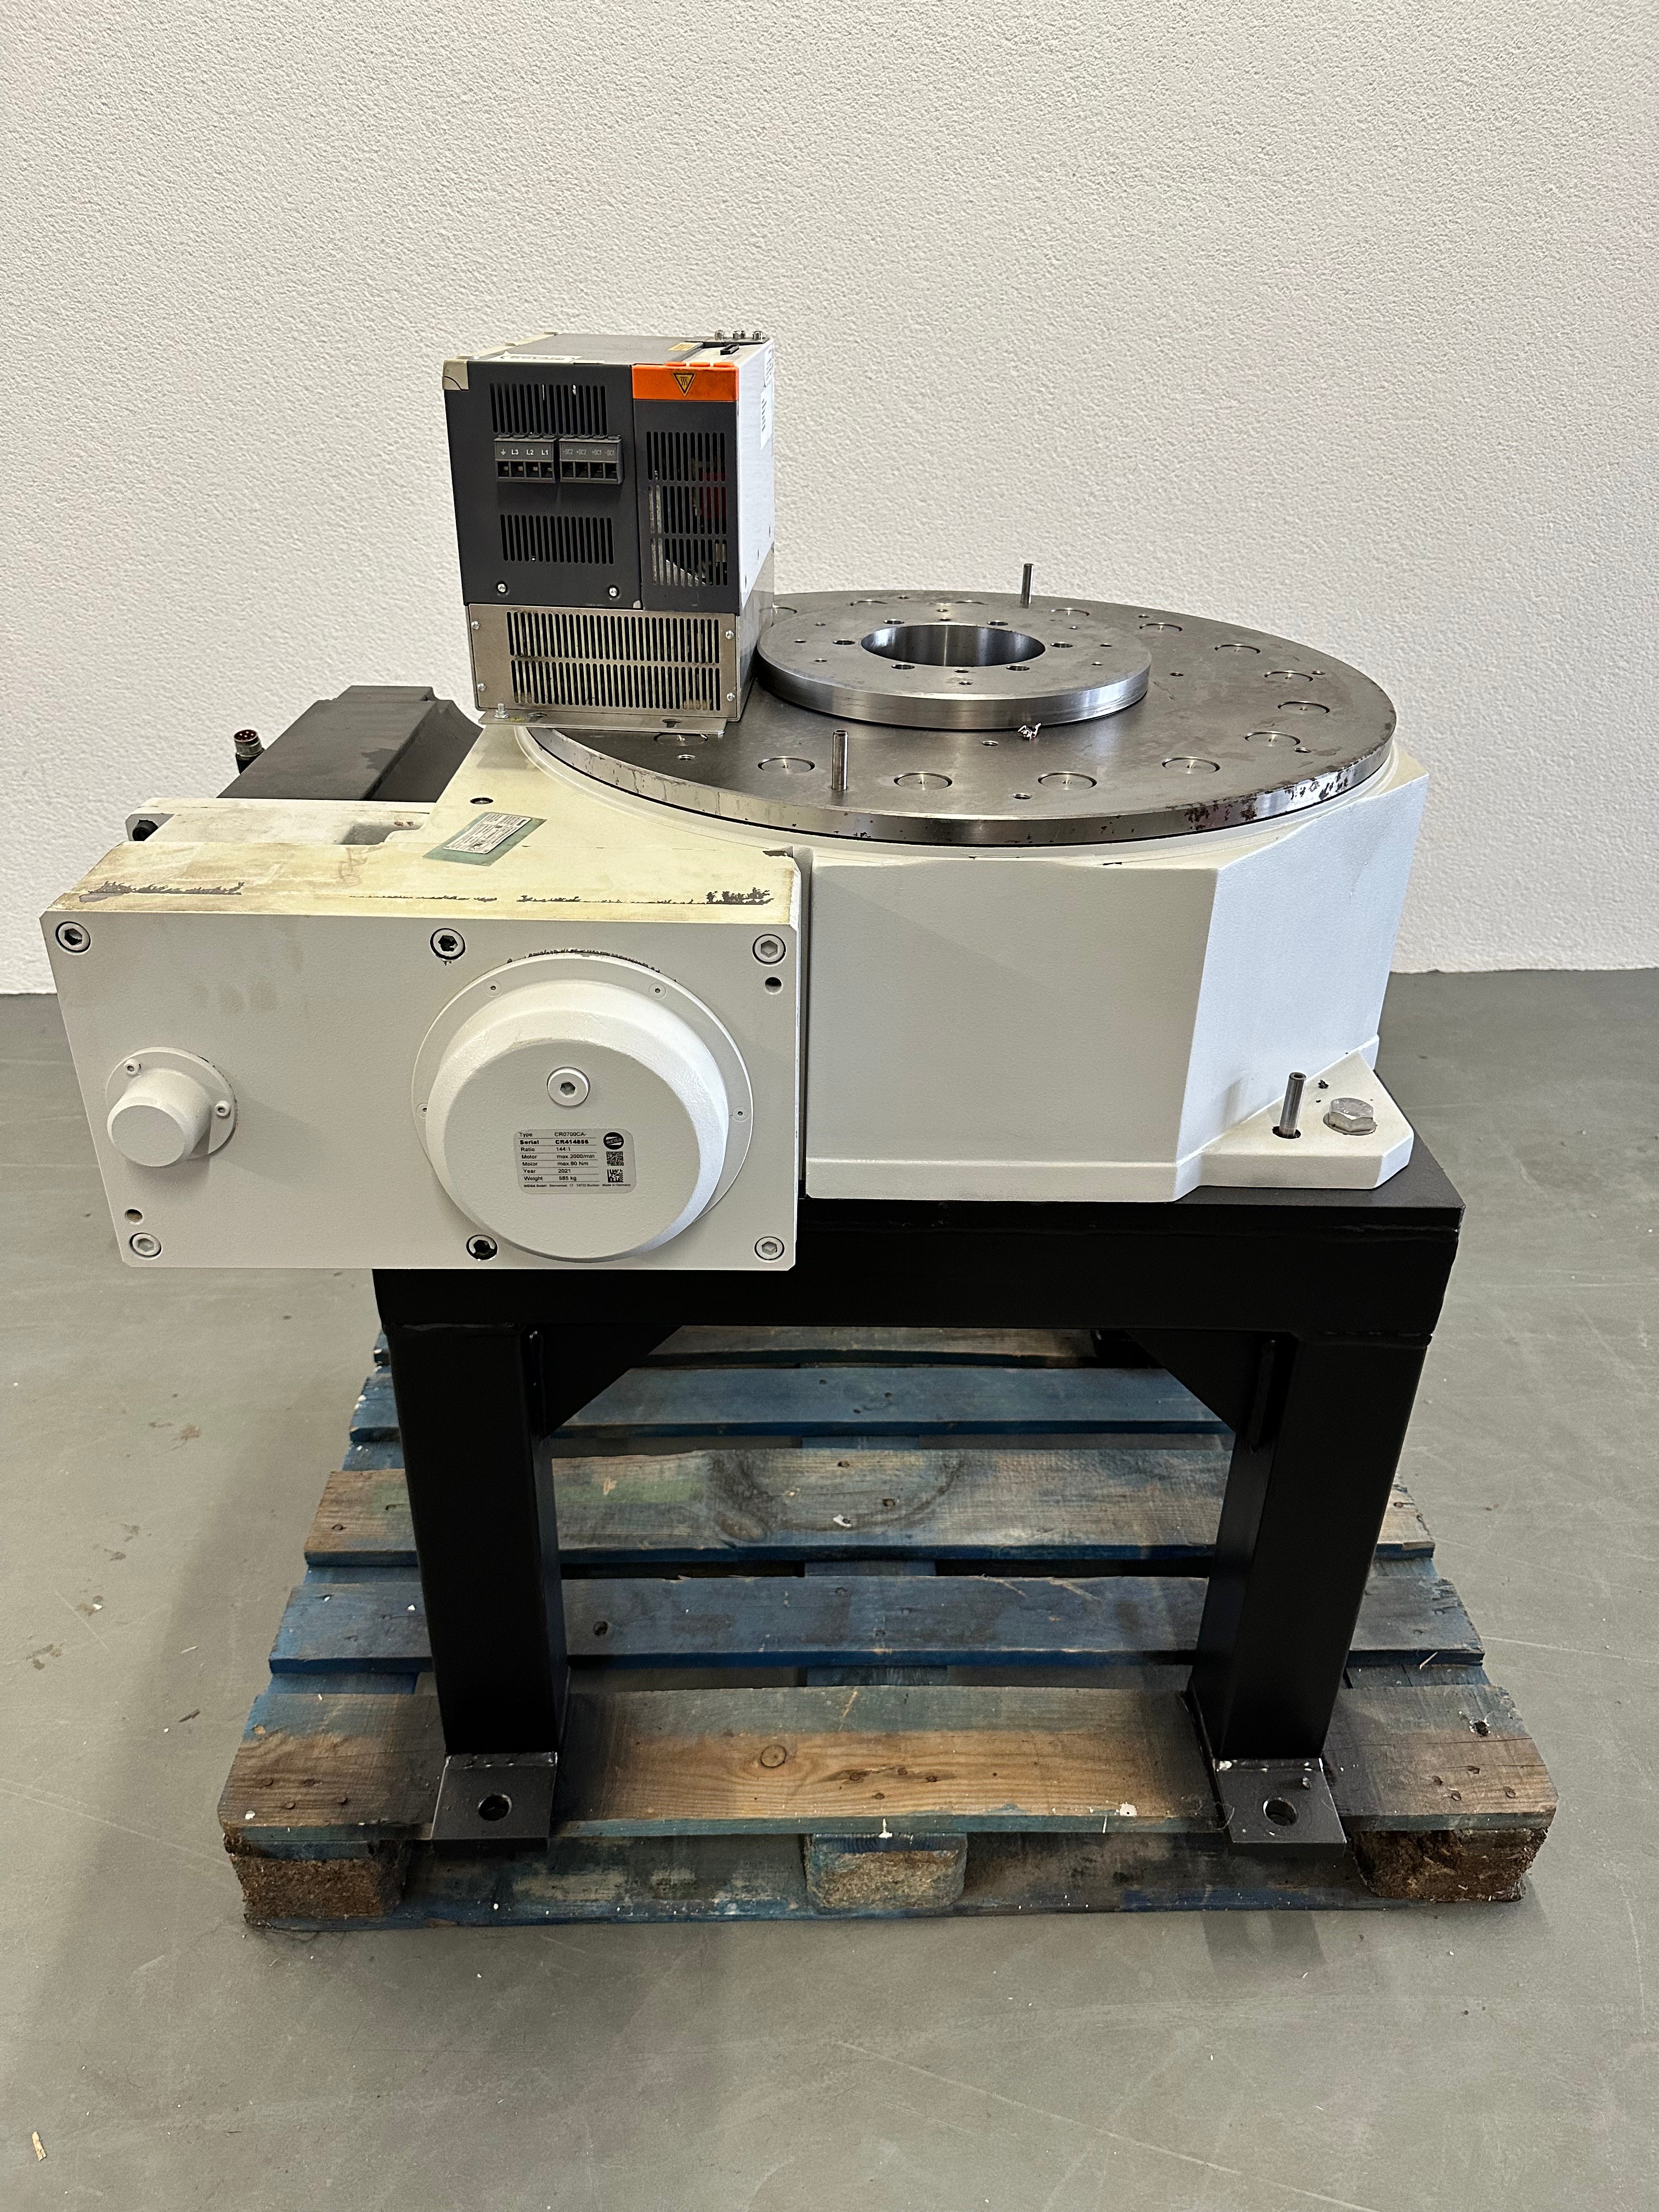 Table robuste WEISS GmbH CR0700CA avec servoamplificateur B&R 8V1180.00-2